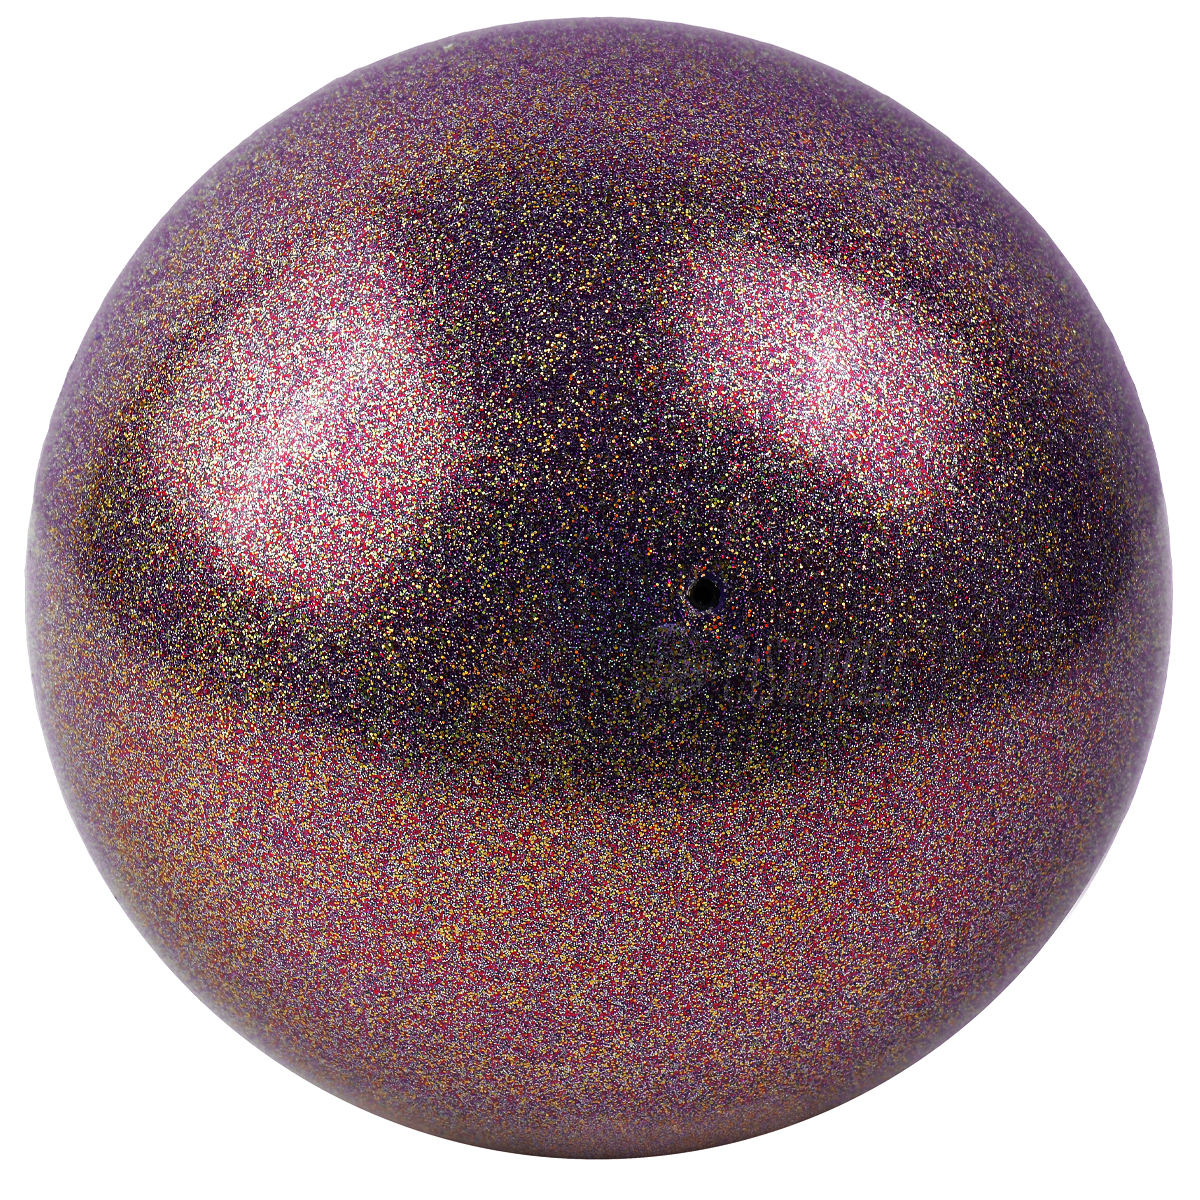 Мяч 18 см Pastorelli HV цвет Темно-Фиолетовый Артикул 00048